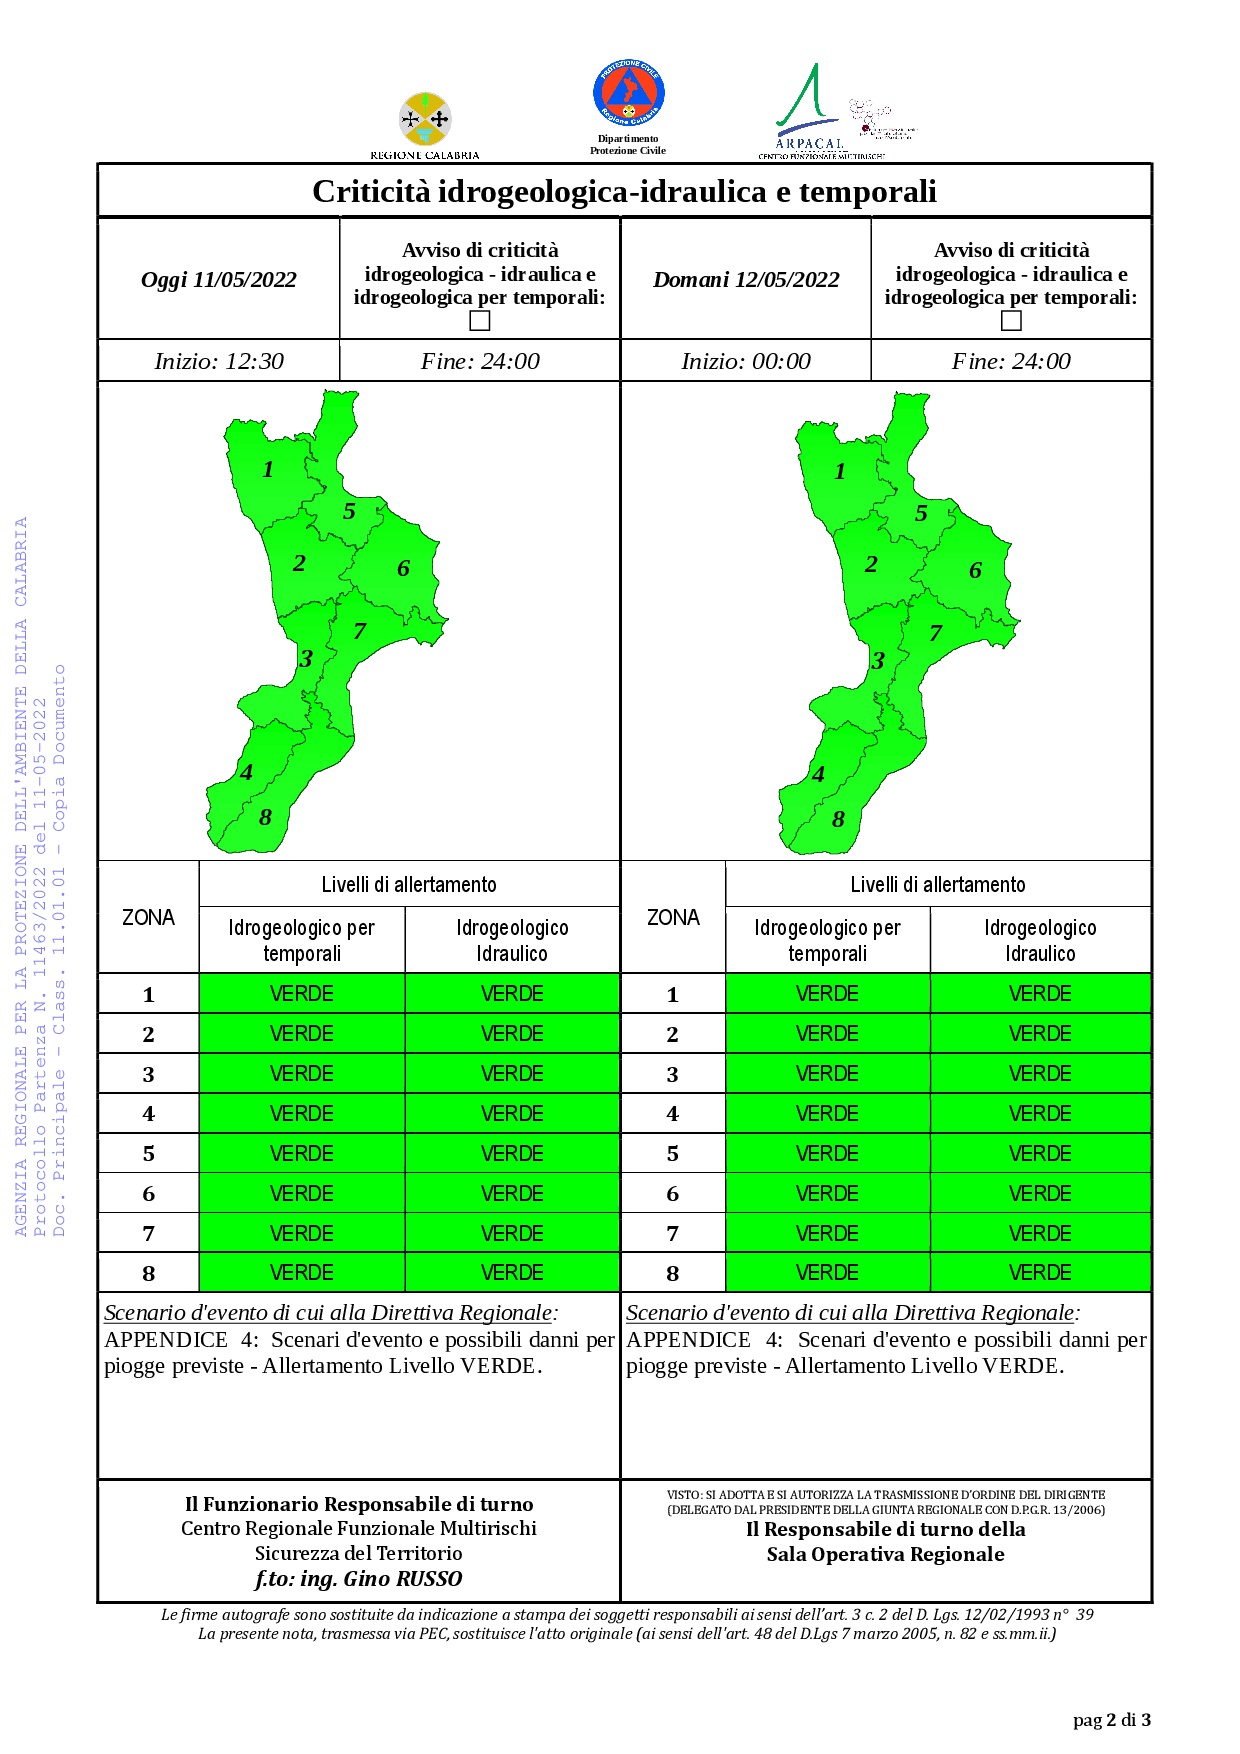 Criticità idrogeologica-idraulica e temporali in Calabria 11-05-2022